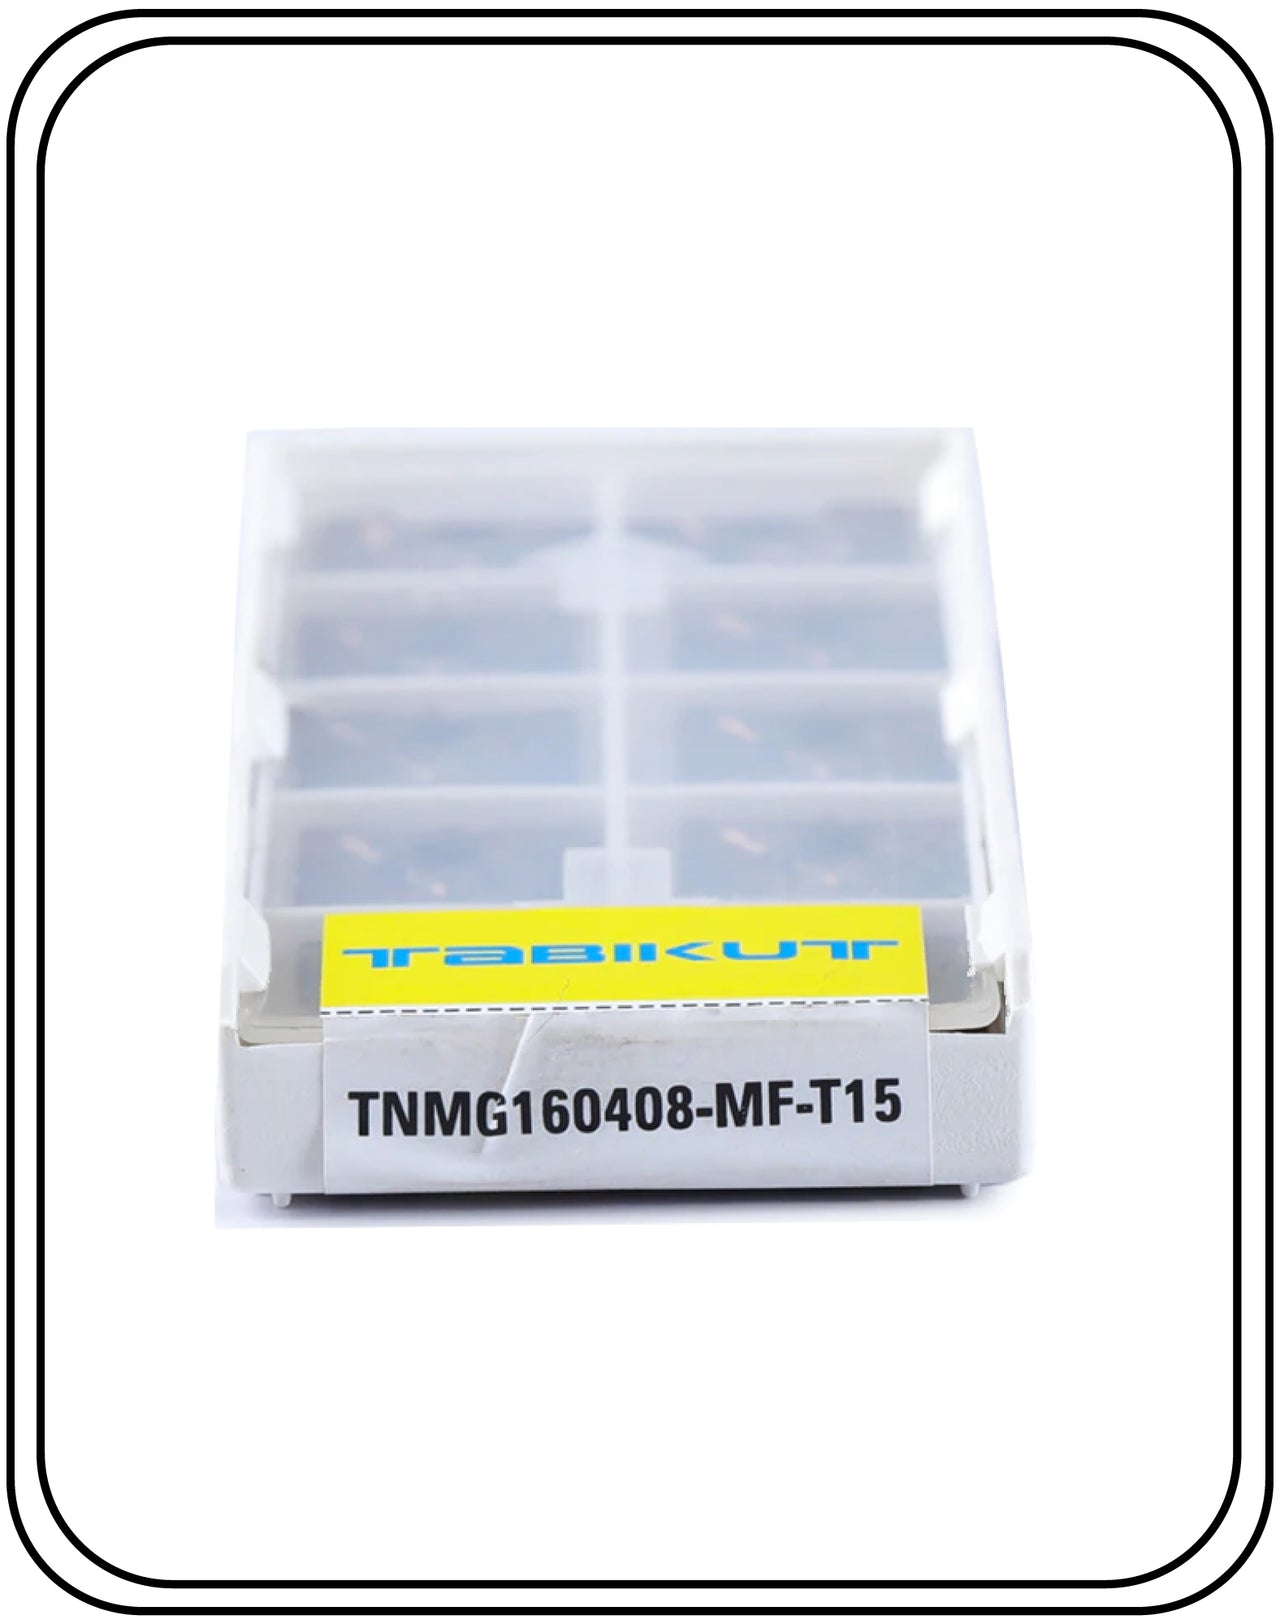 TNMG160408 MF T15 TABIKUT carbide insert